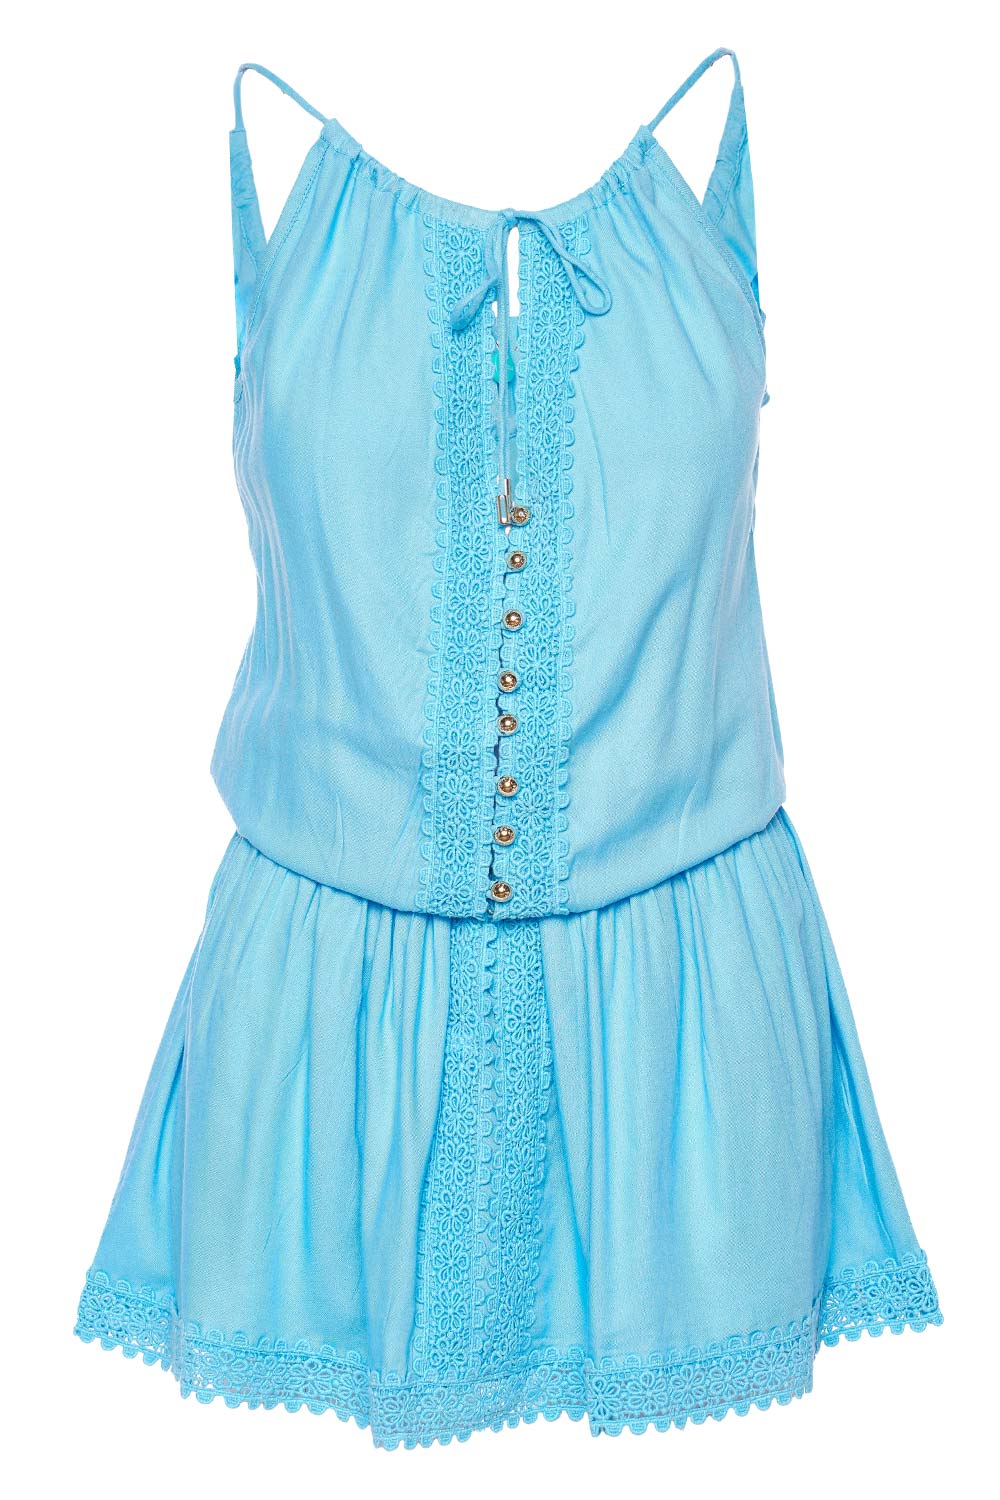 Melissa Odabash Chelsea Blue Cover Up Mini Dress